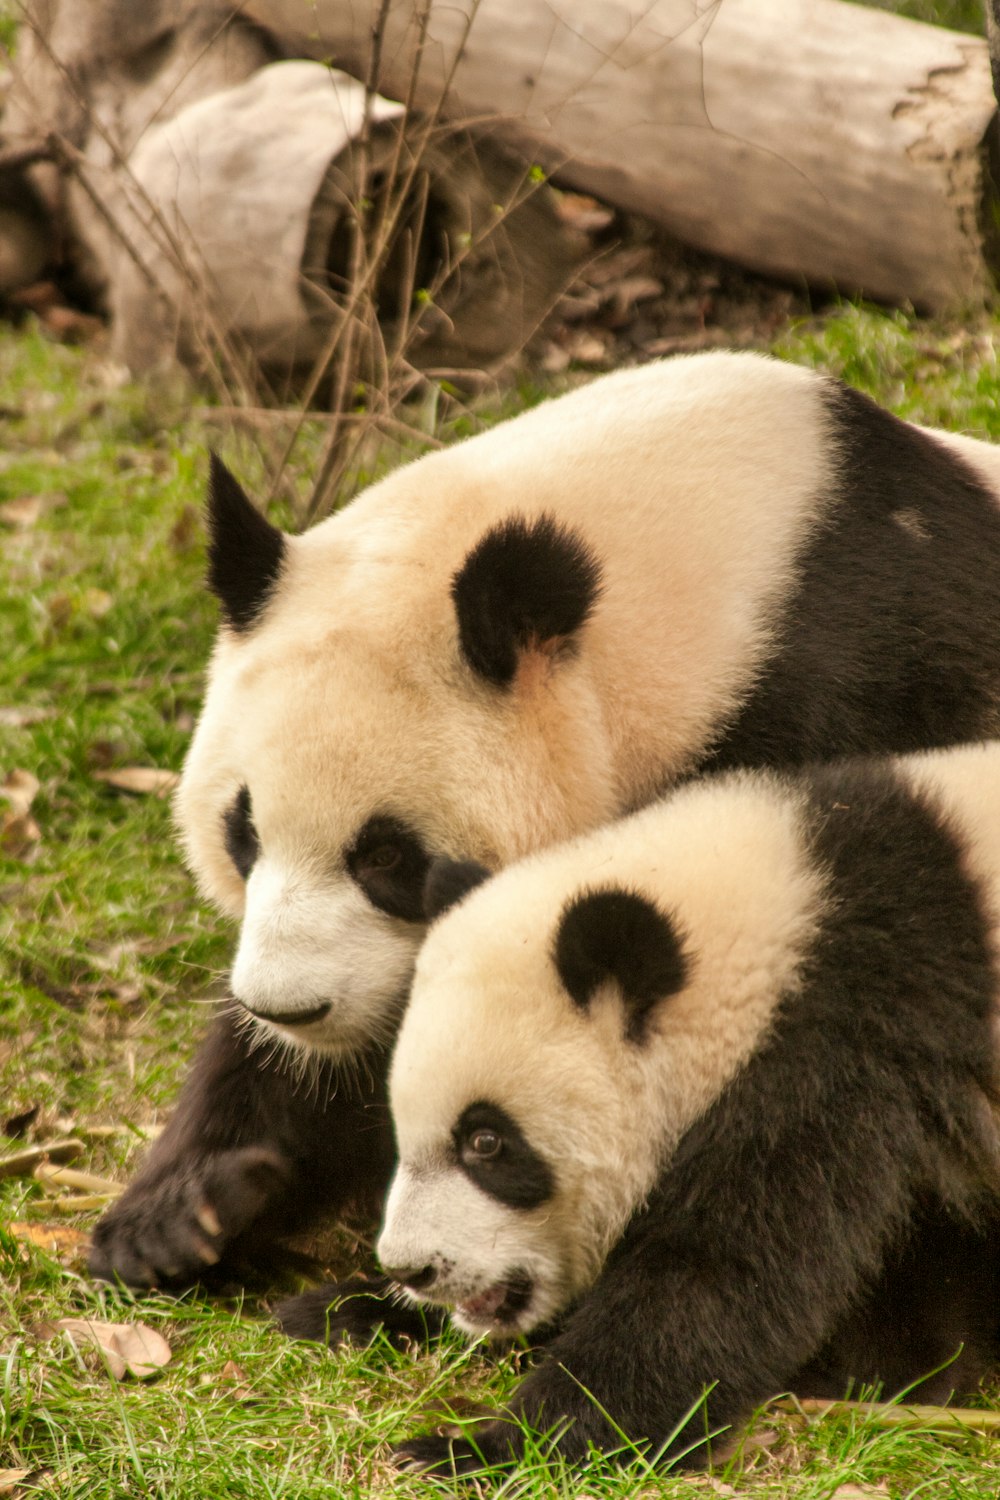 white and black panda on green grass during daytime